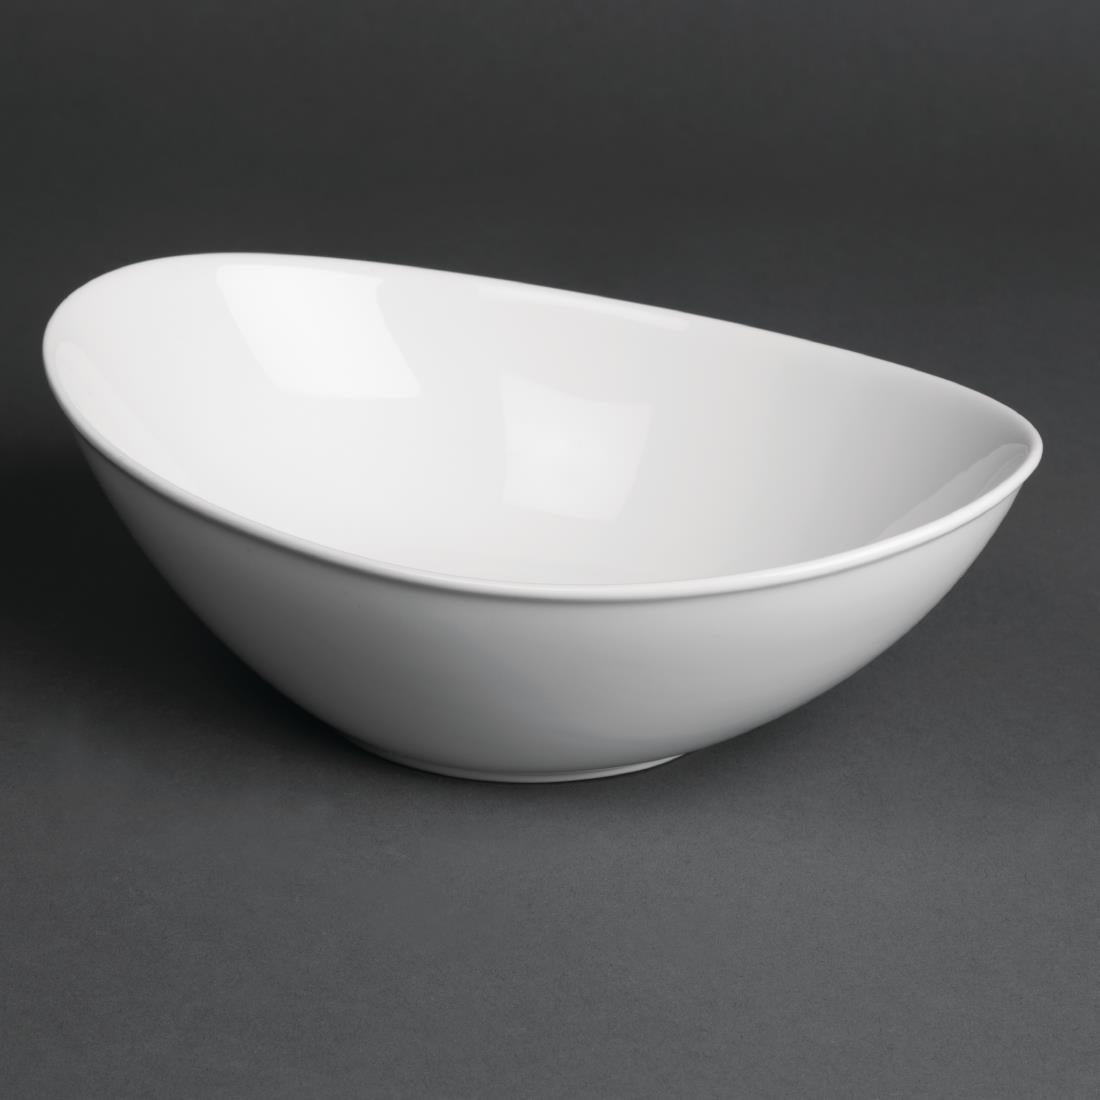 CG060 Royal Porcelain Classic White Salad Bowls 200mm (Pack of 6)